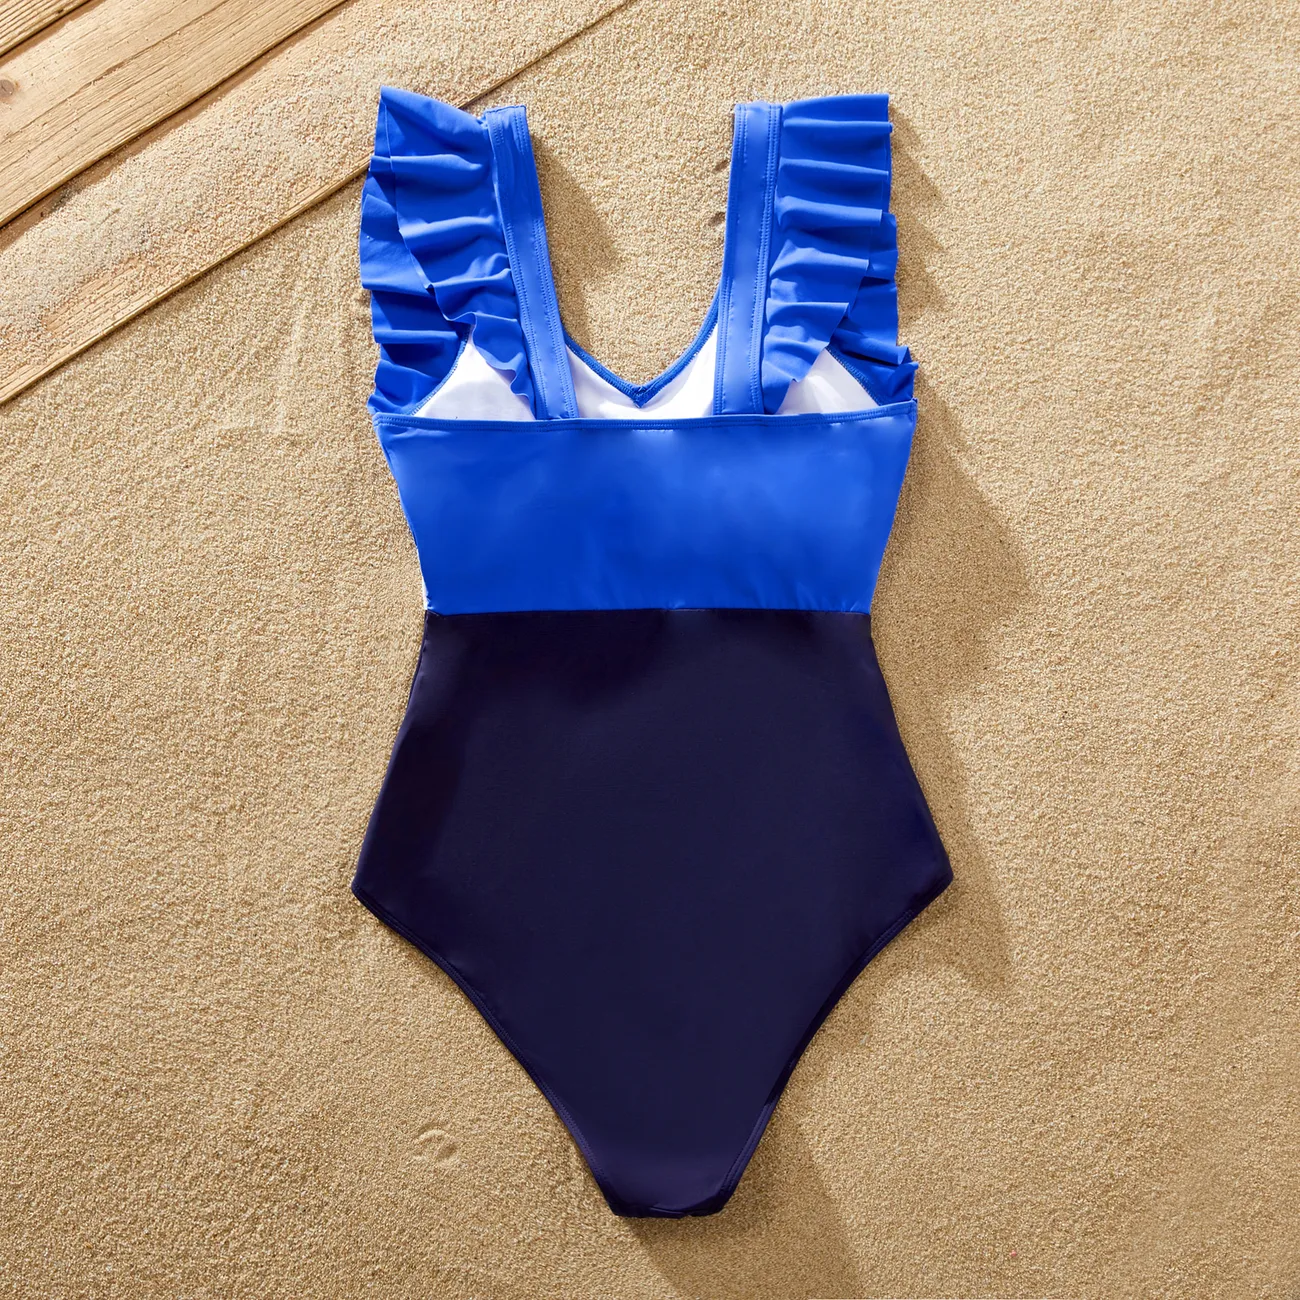 UPF50+ Family Matching Swimsuit Colorblock Drawstring Swim Trunks or Ruffle Trim One-Piece Swimsuit (Sun-Protective) Navy big image 1